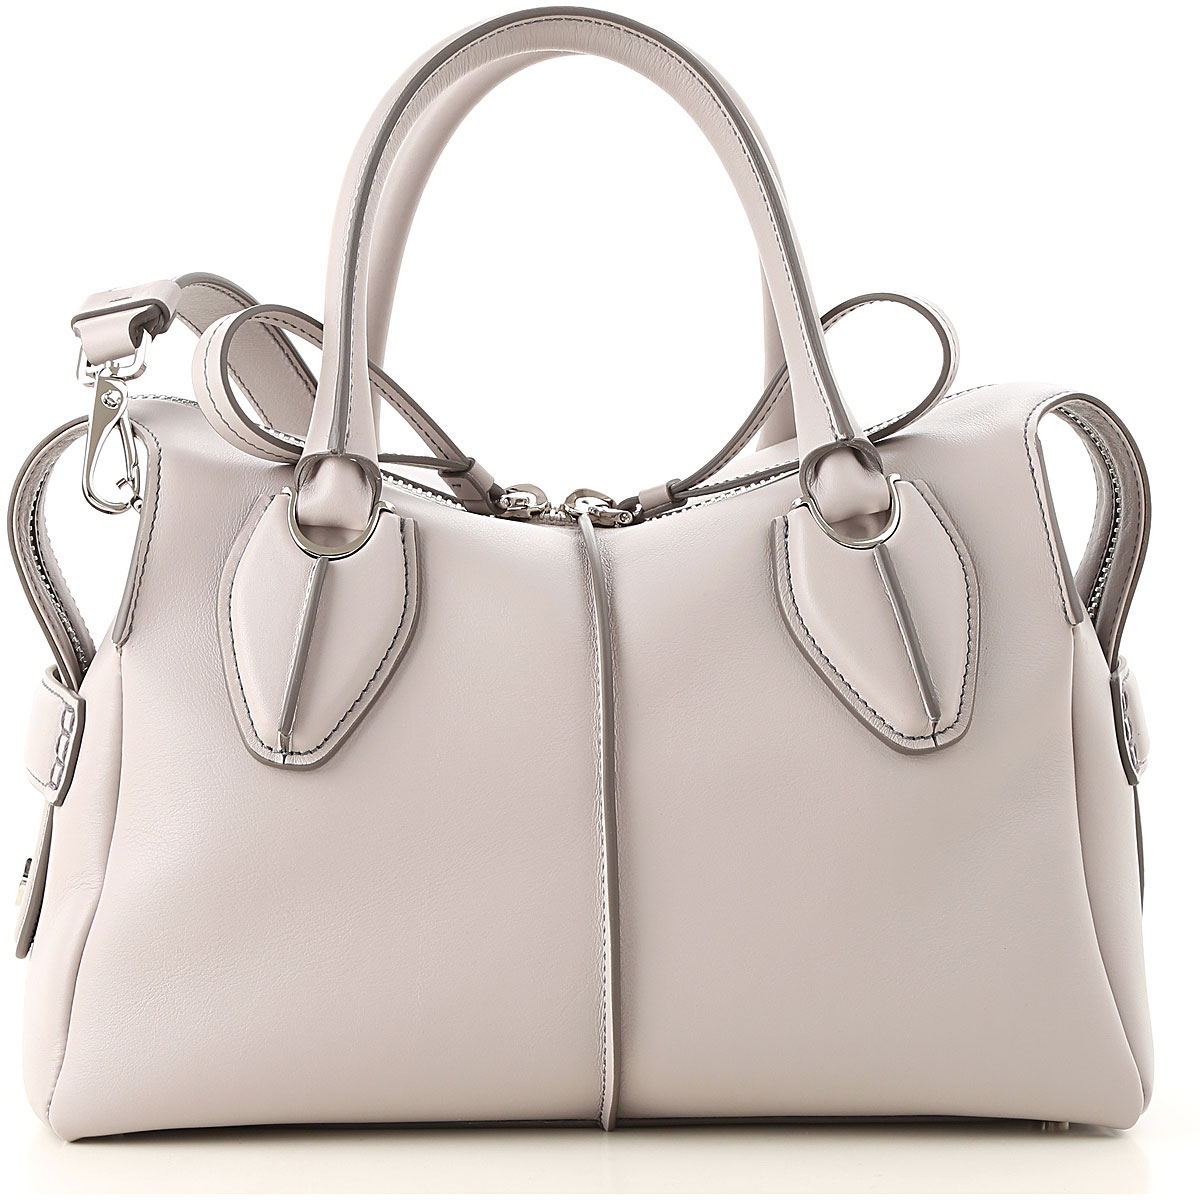 Handbags Tods, Style code: xbwanyh0200xpab220--